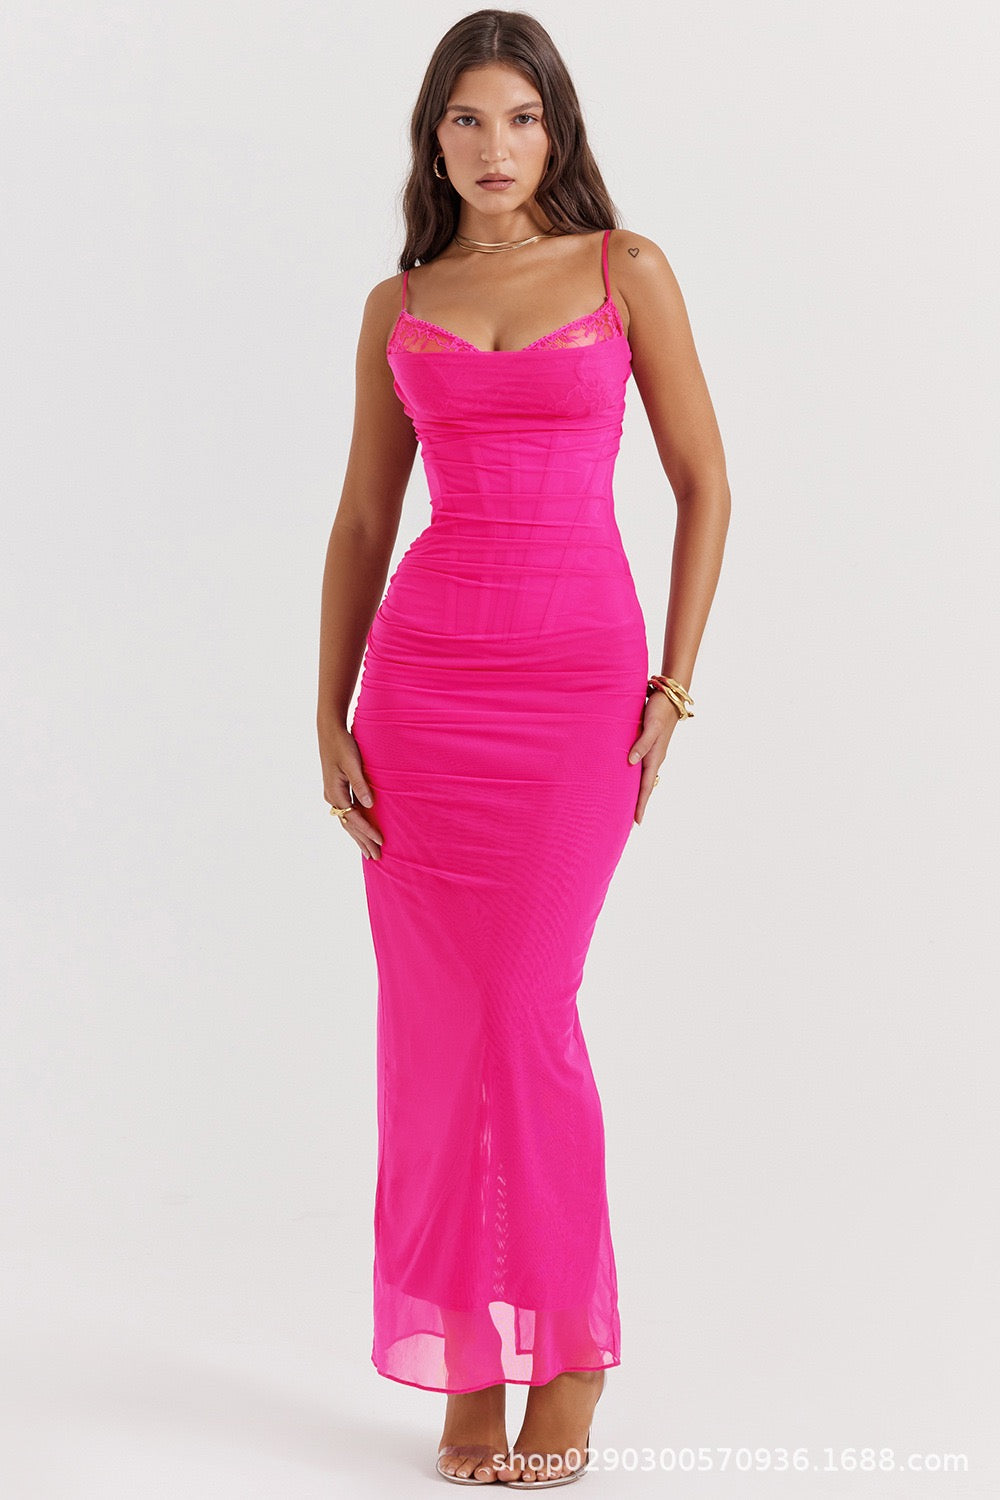 #388 Pink dress